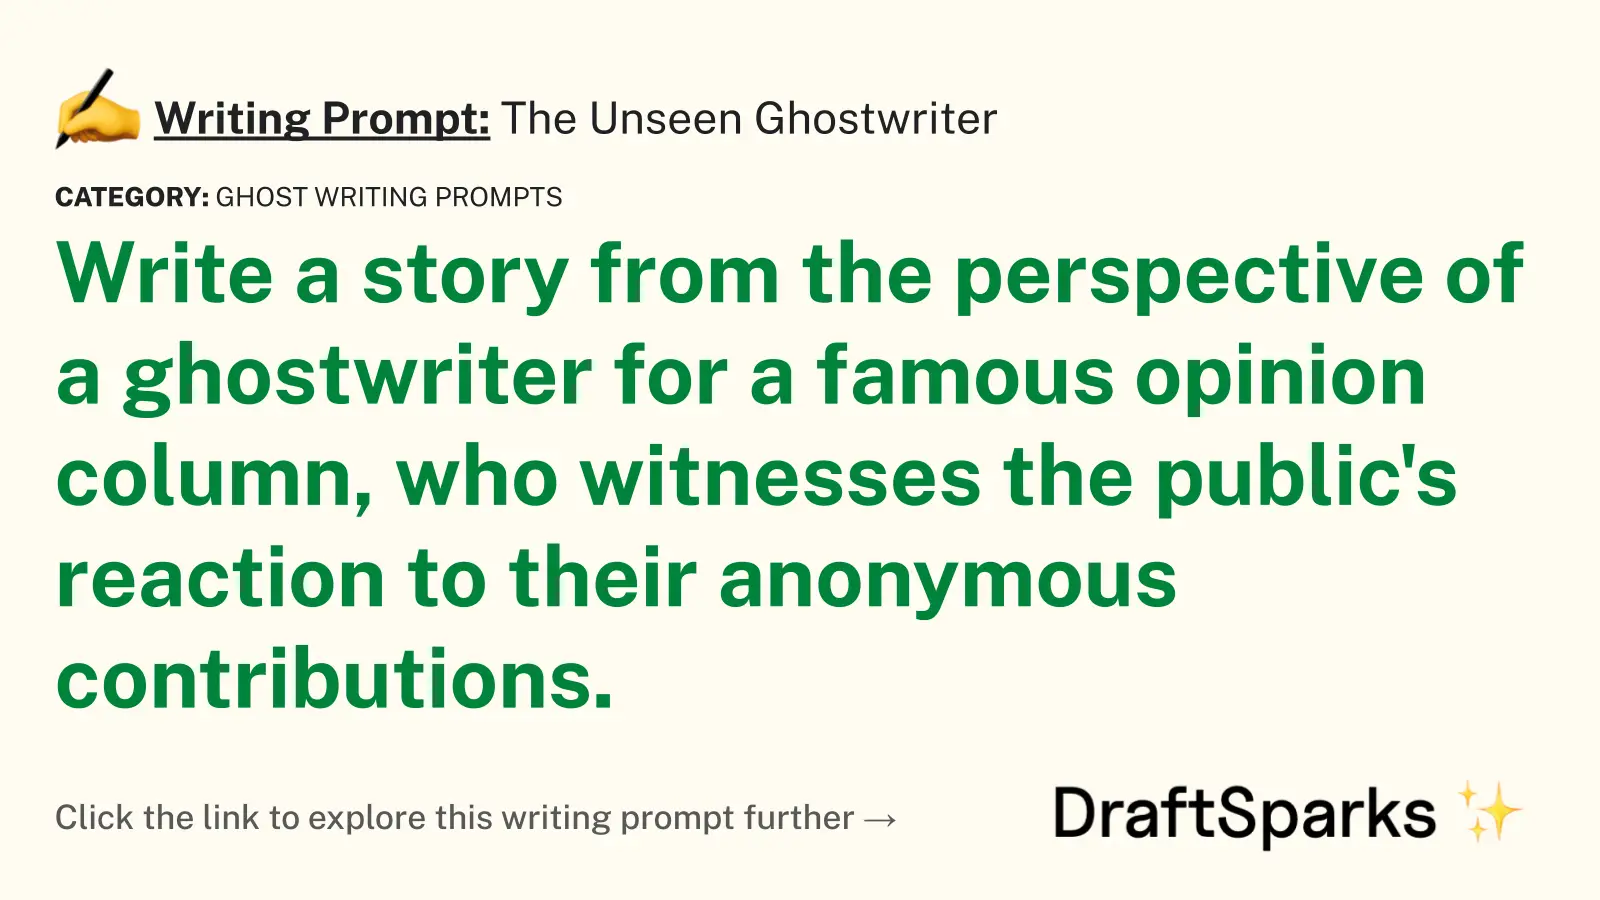 The Unseen Ghostwriter